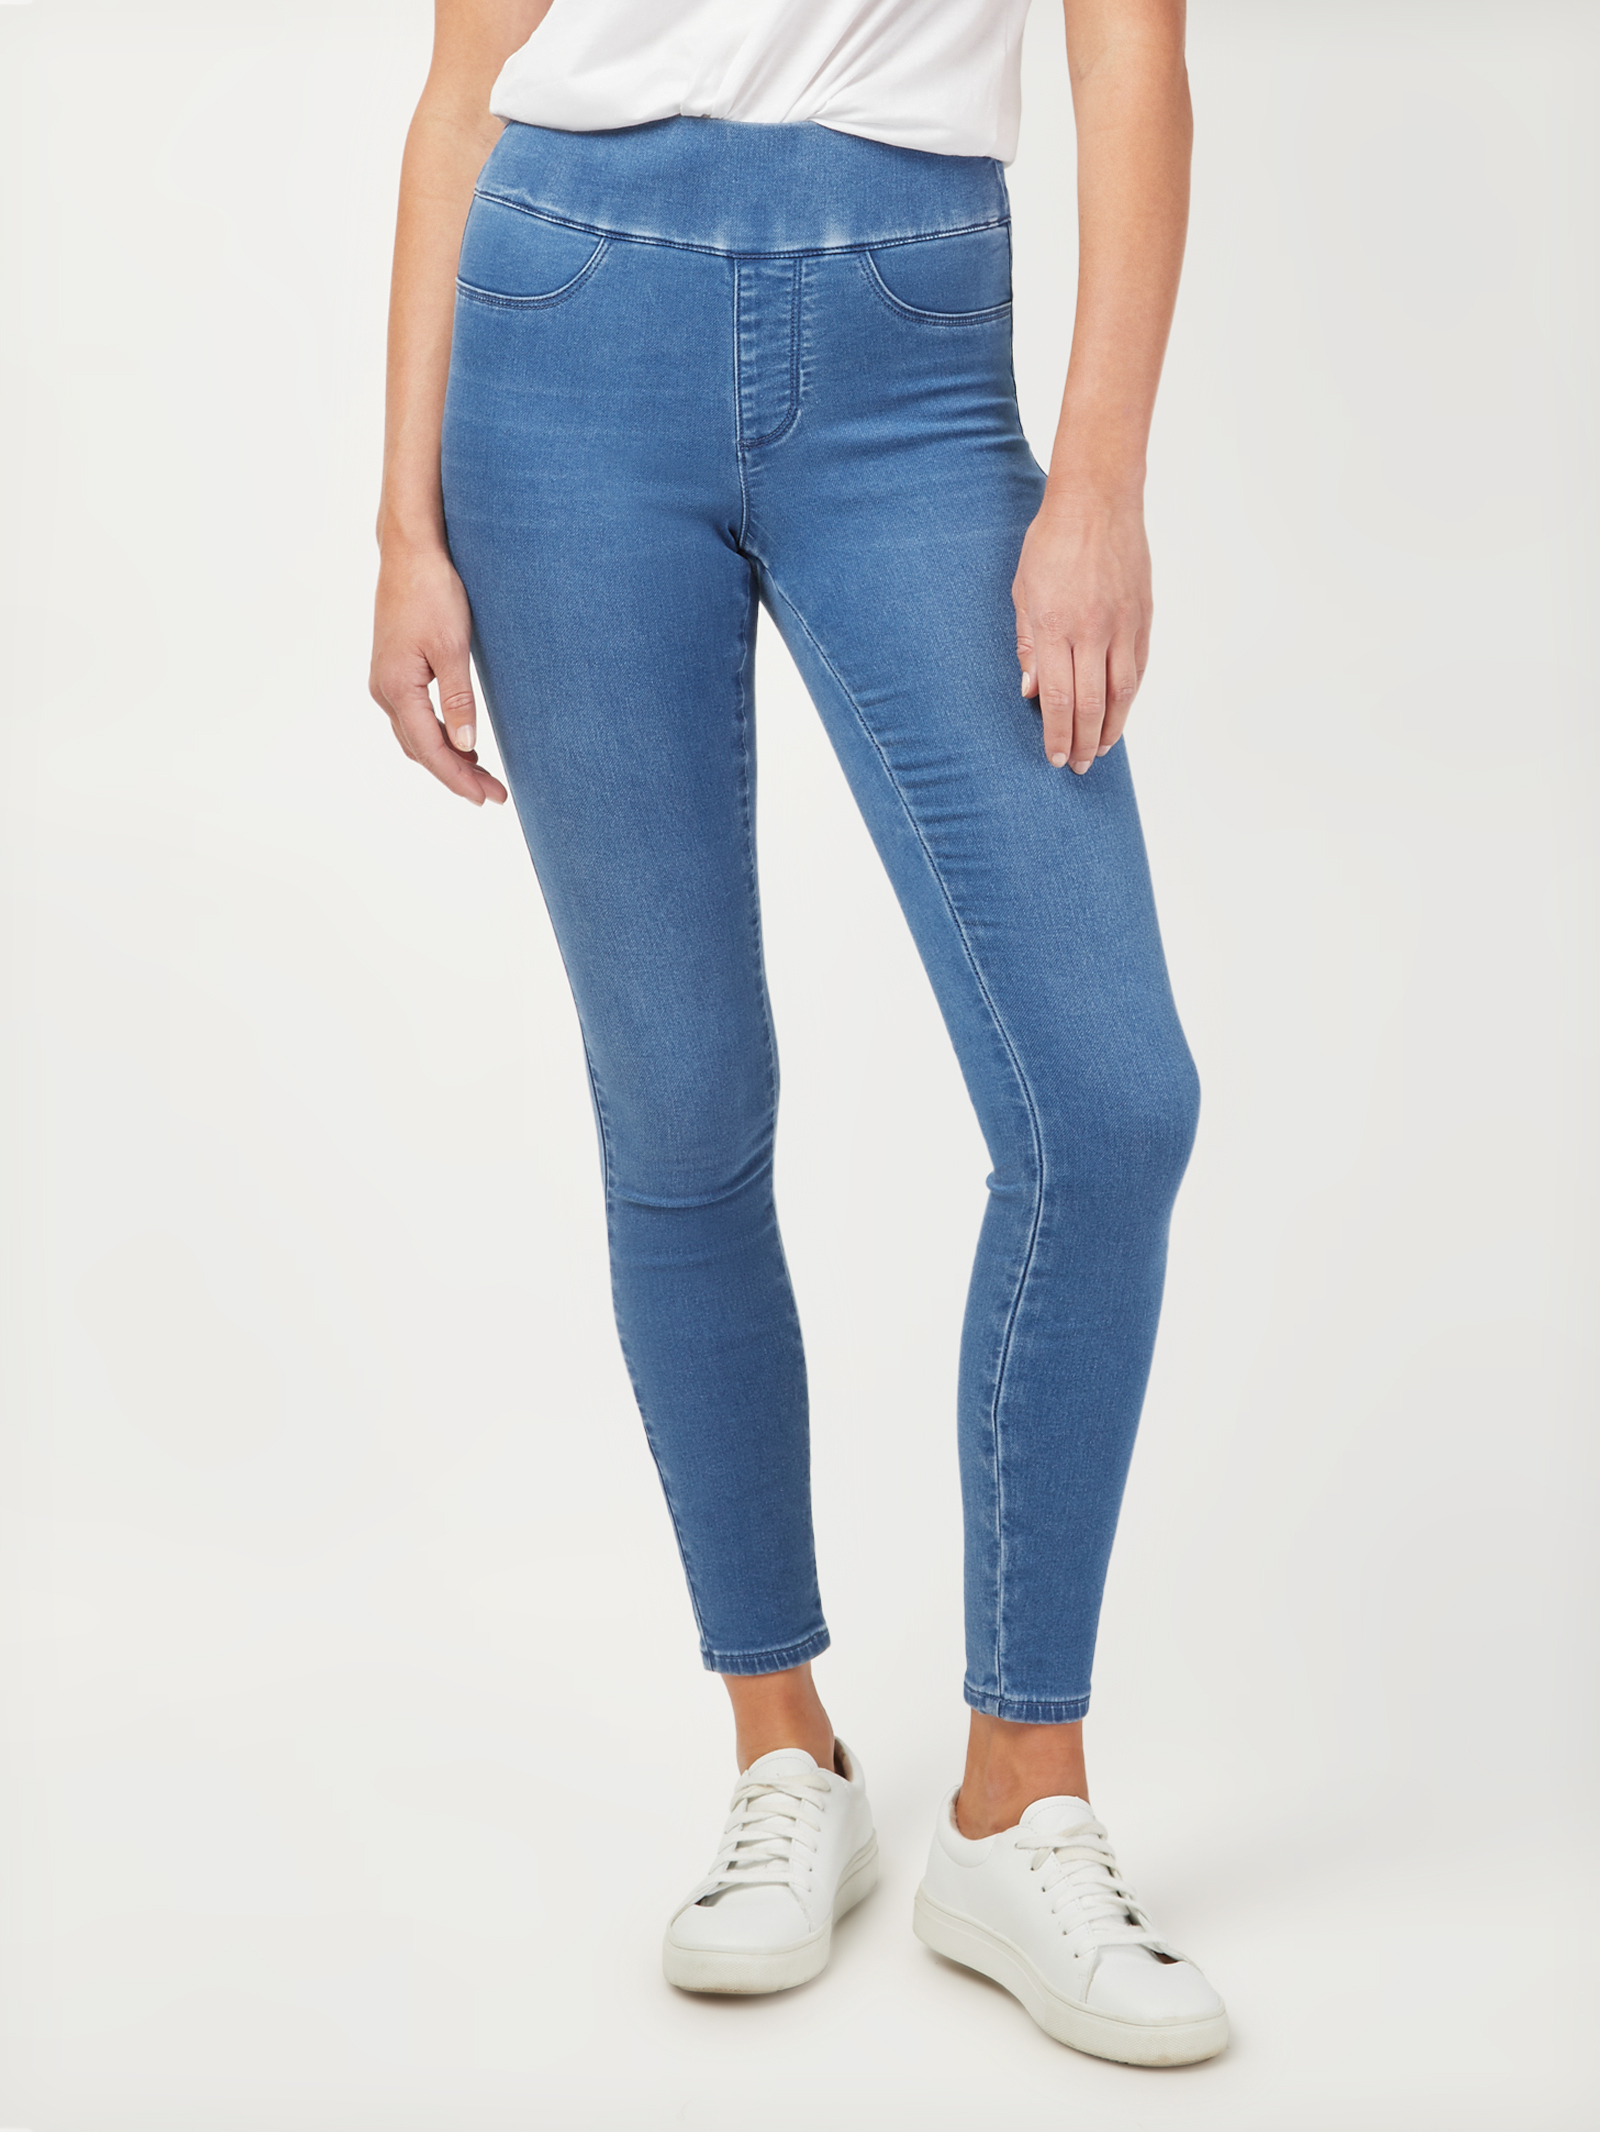 Tessa J-Luxe Skinny Jeans | Jeanswest